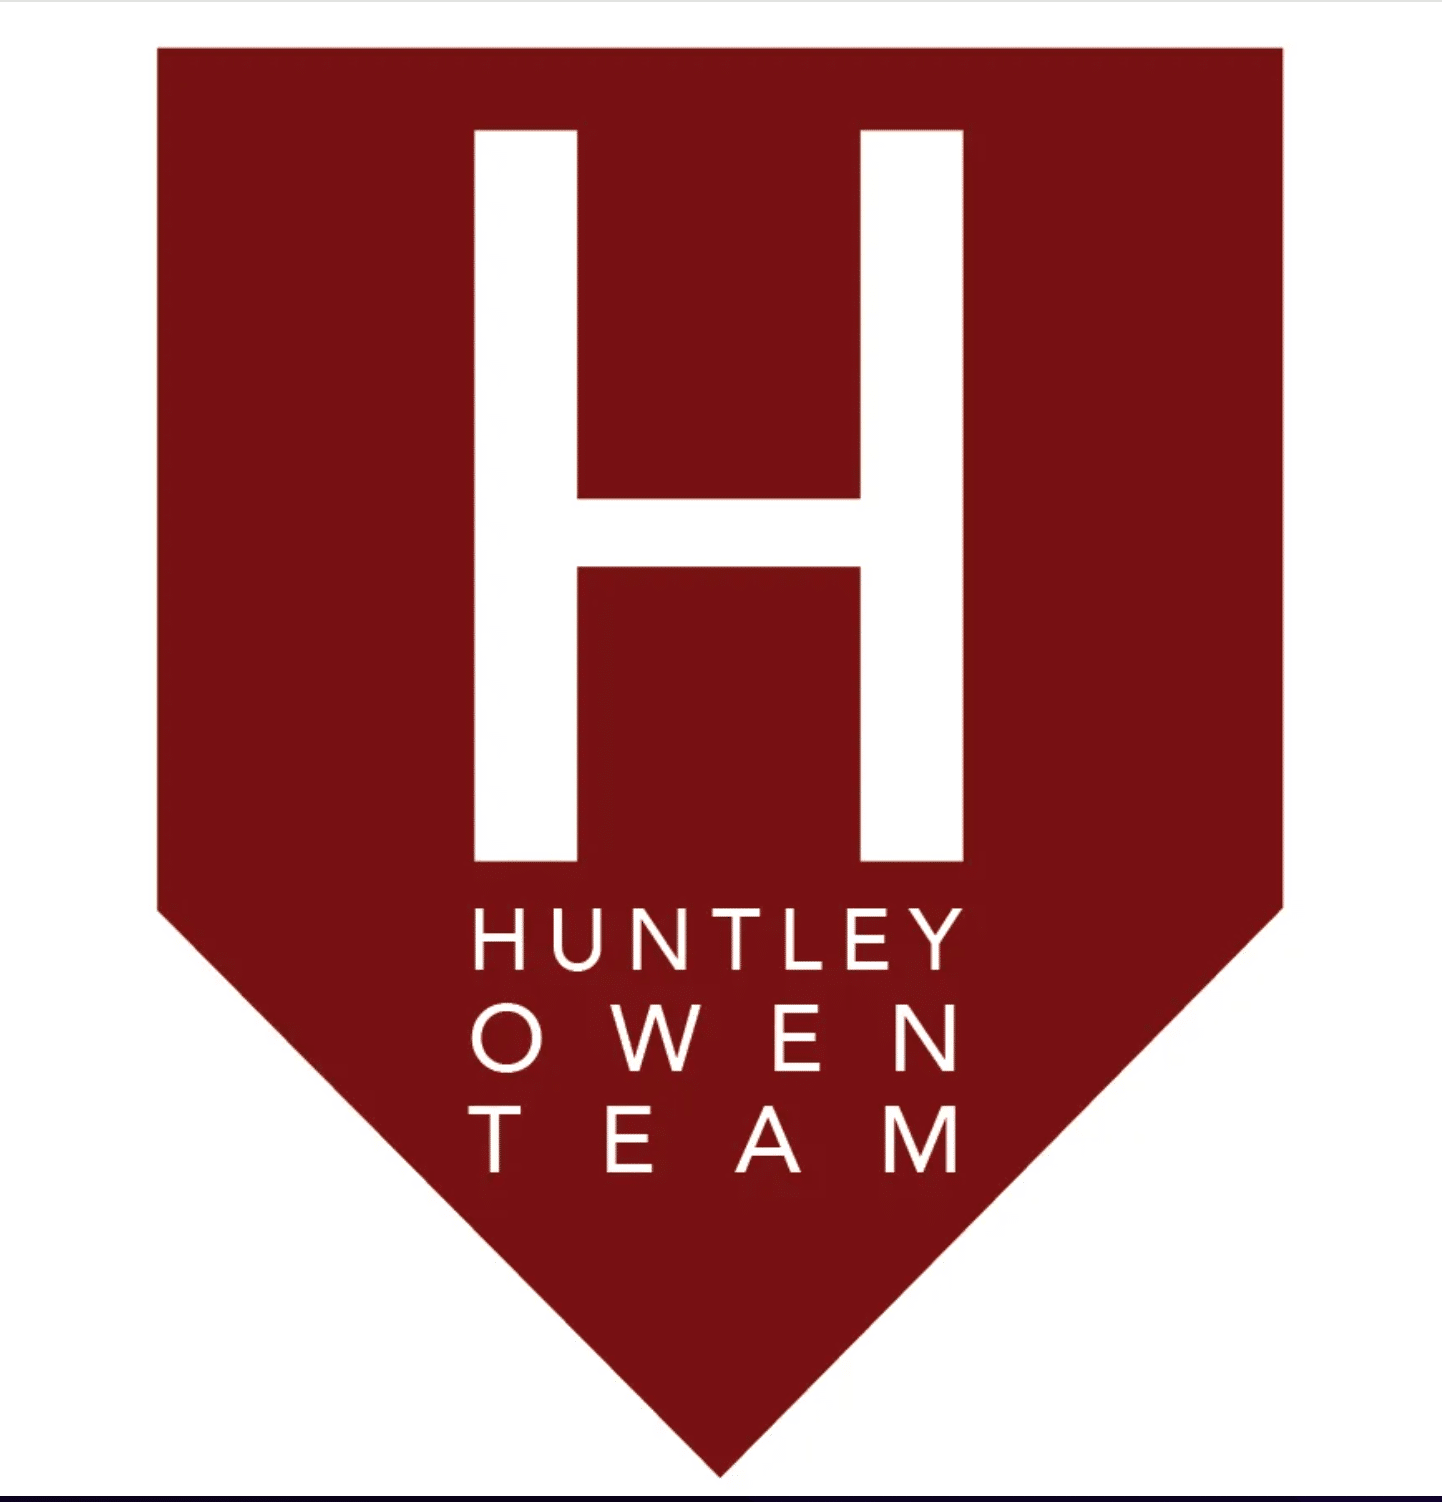 Huntley Owen Team